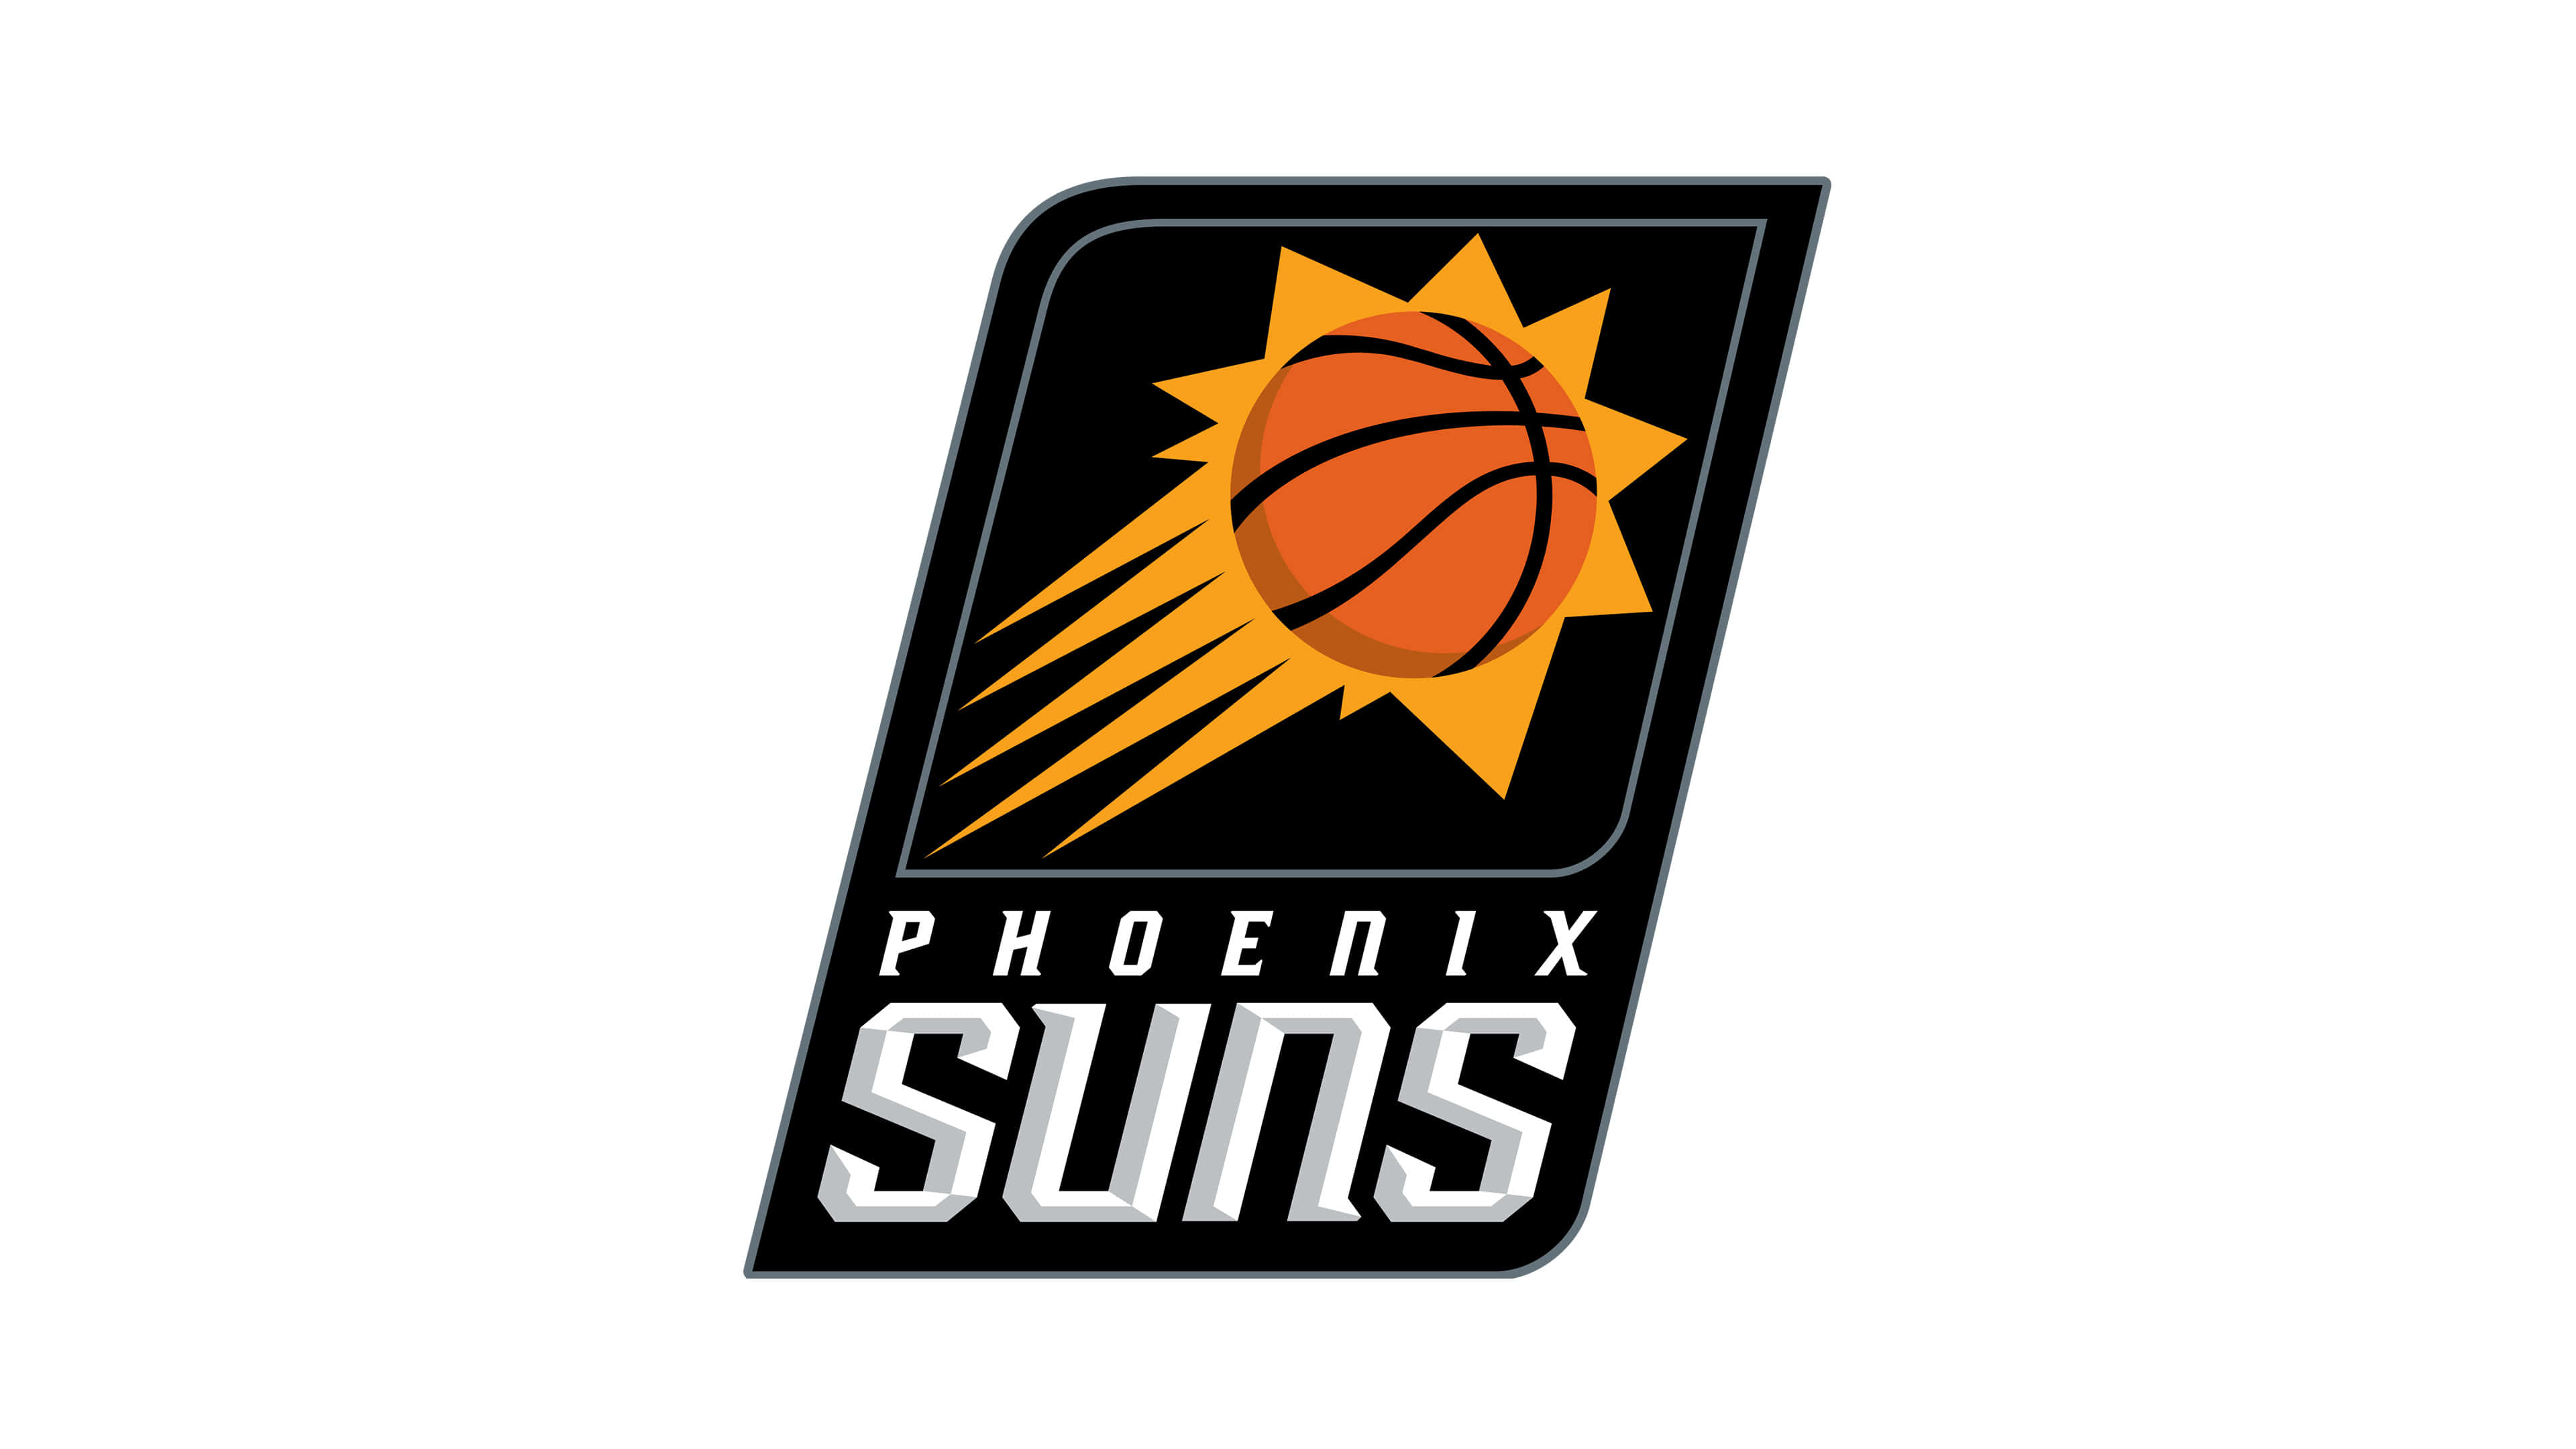 phoenix suns nba logo uhd 4k wallpaper